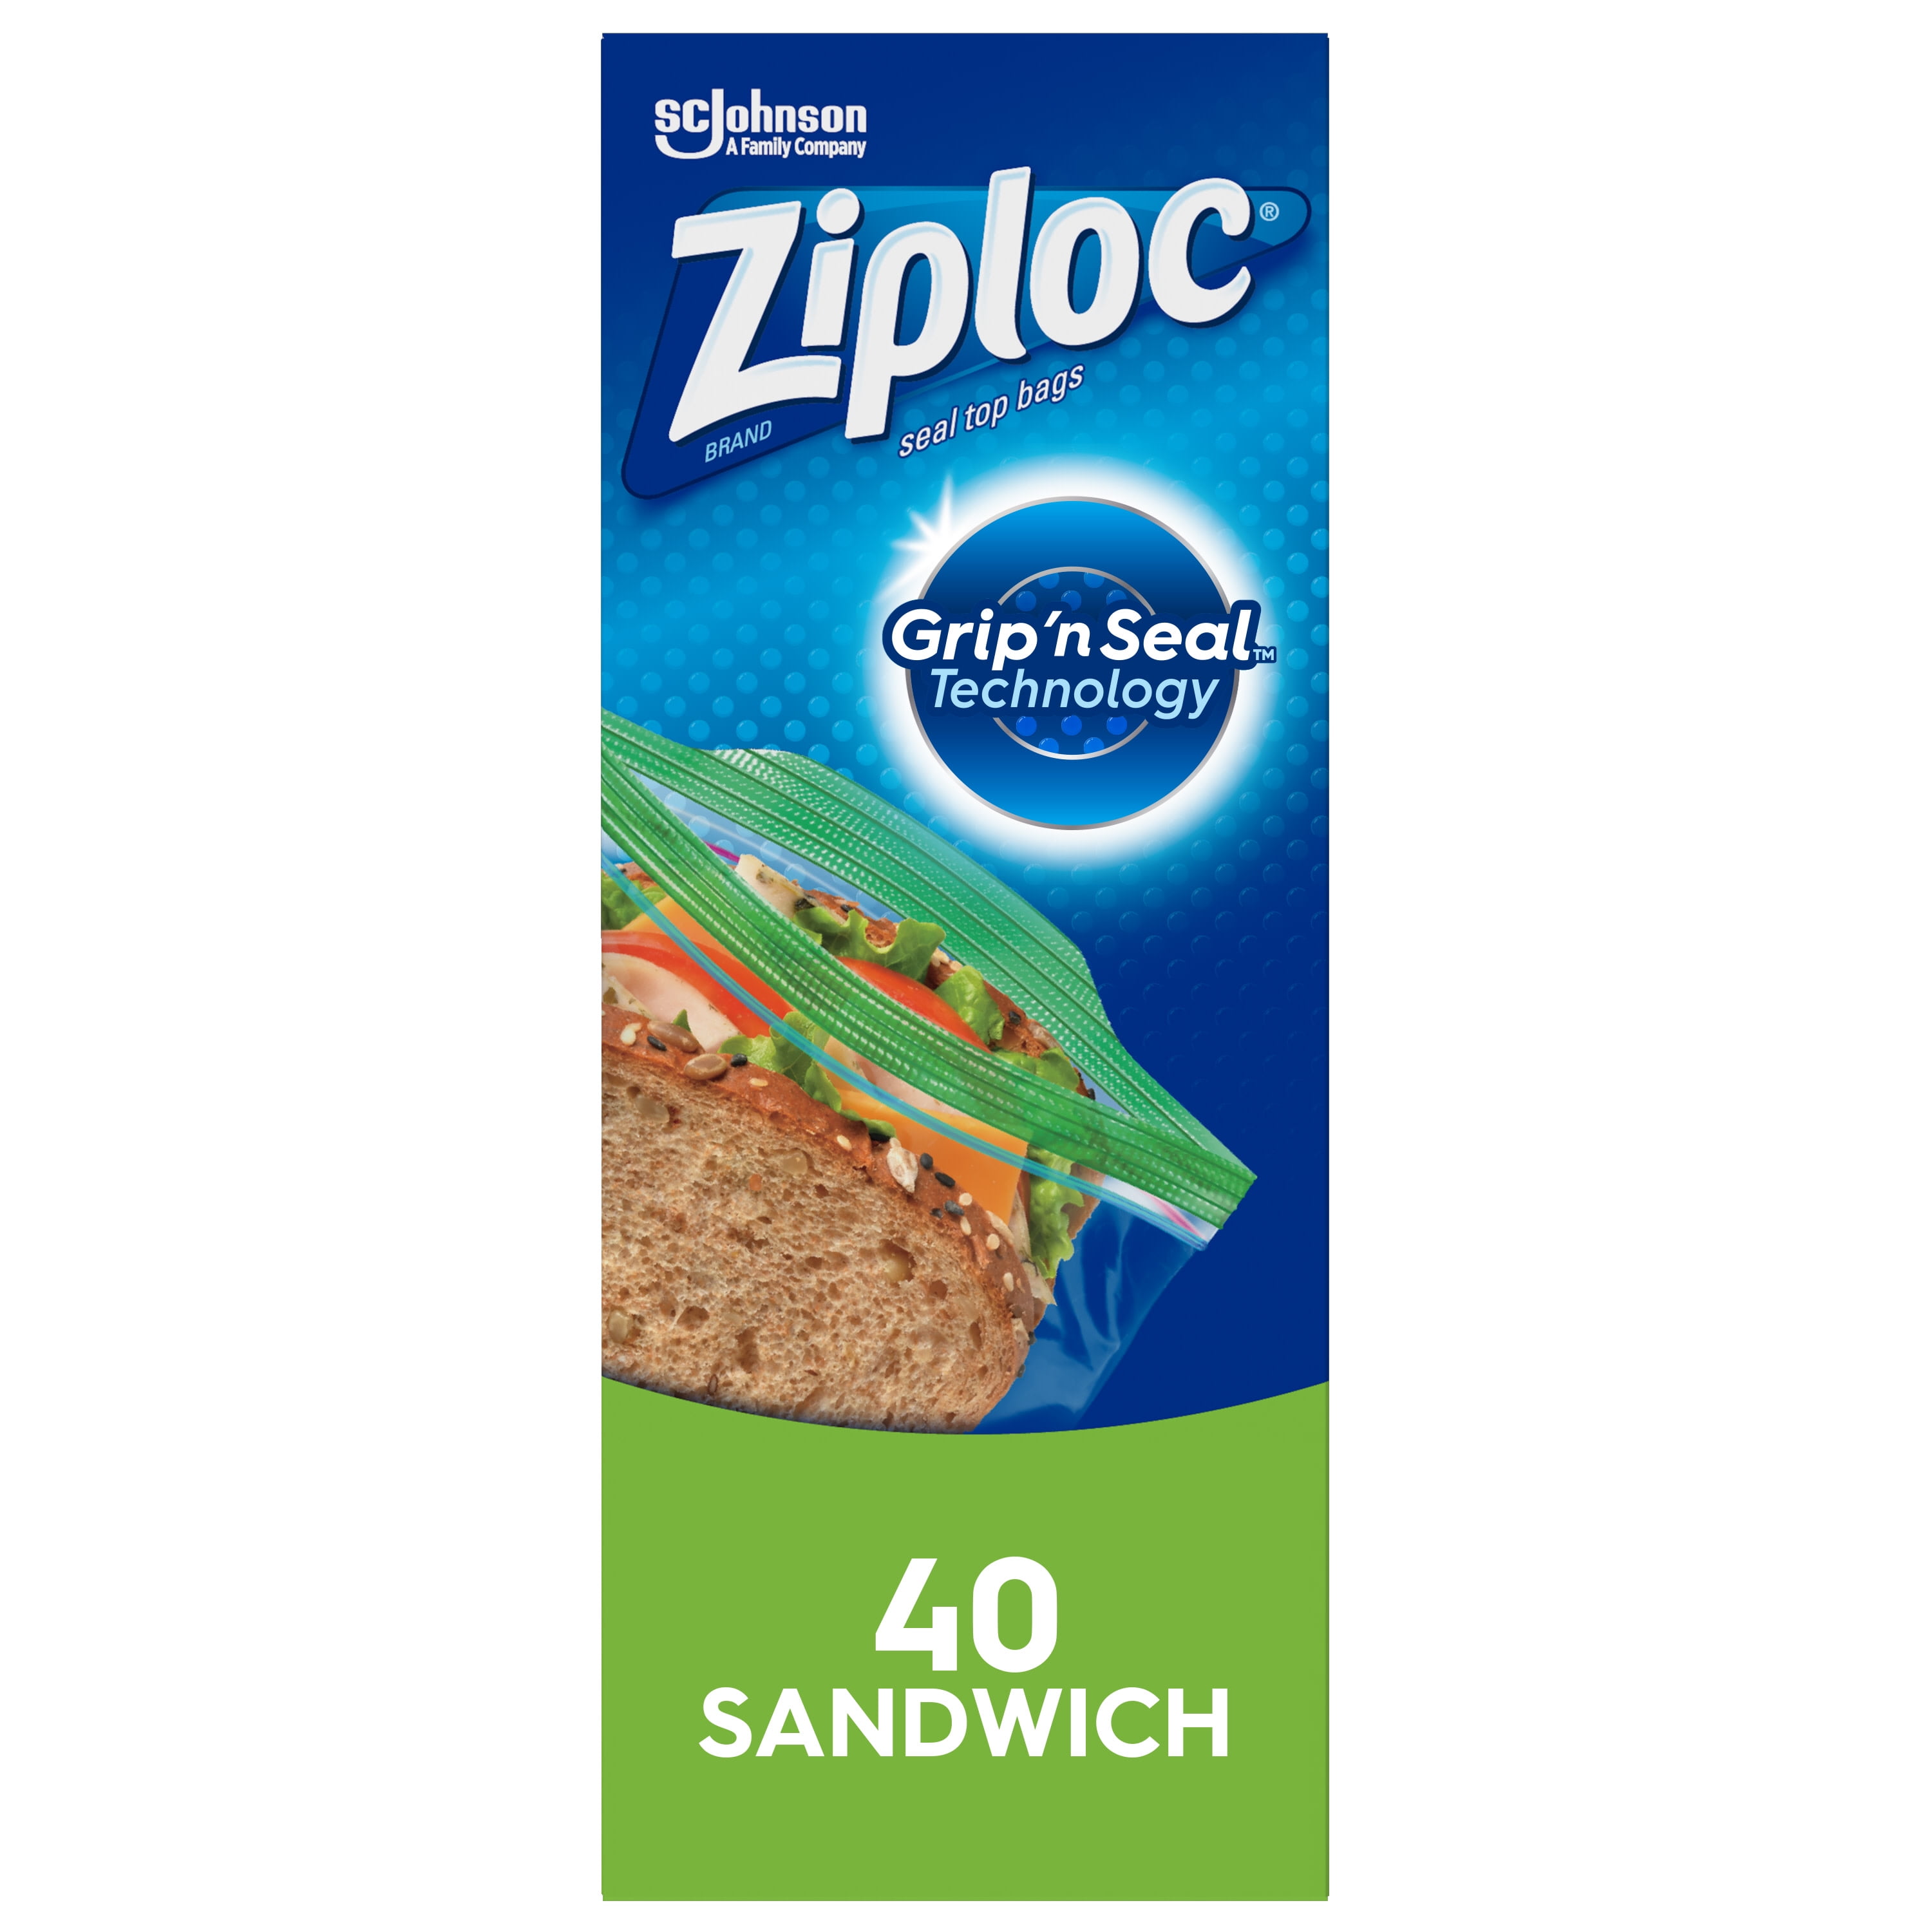 2 Packs Ziploc Sandwich Bags Easy Open Tabs 580 CT Each Pack 